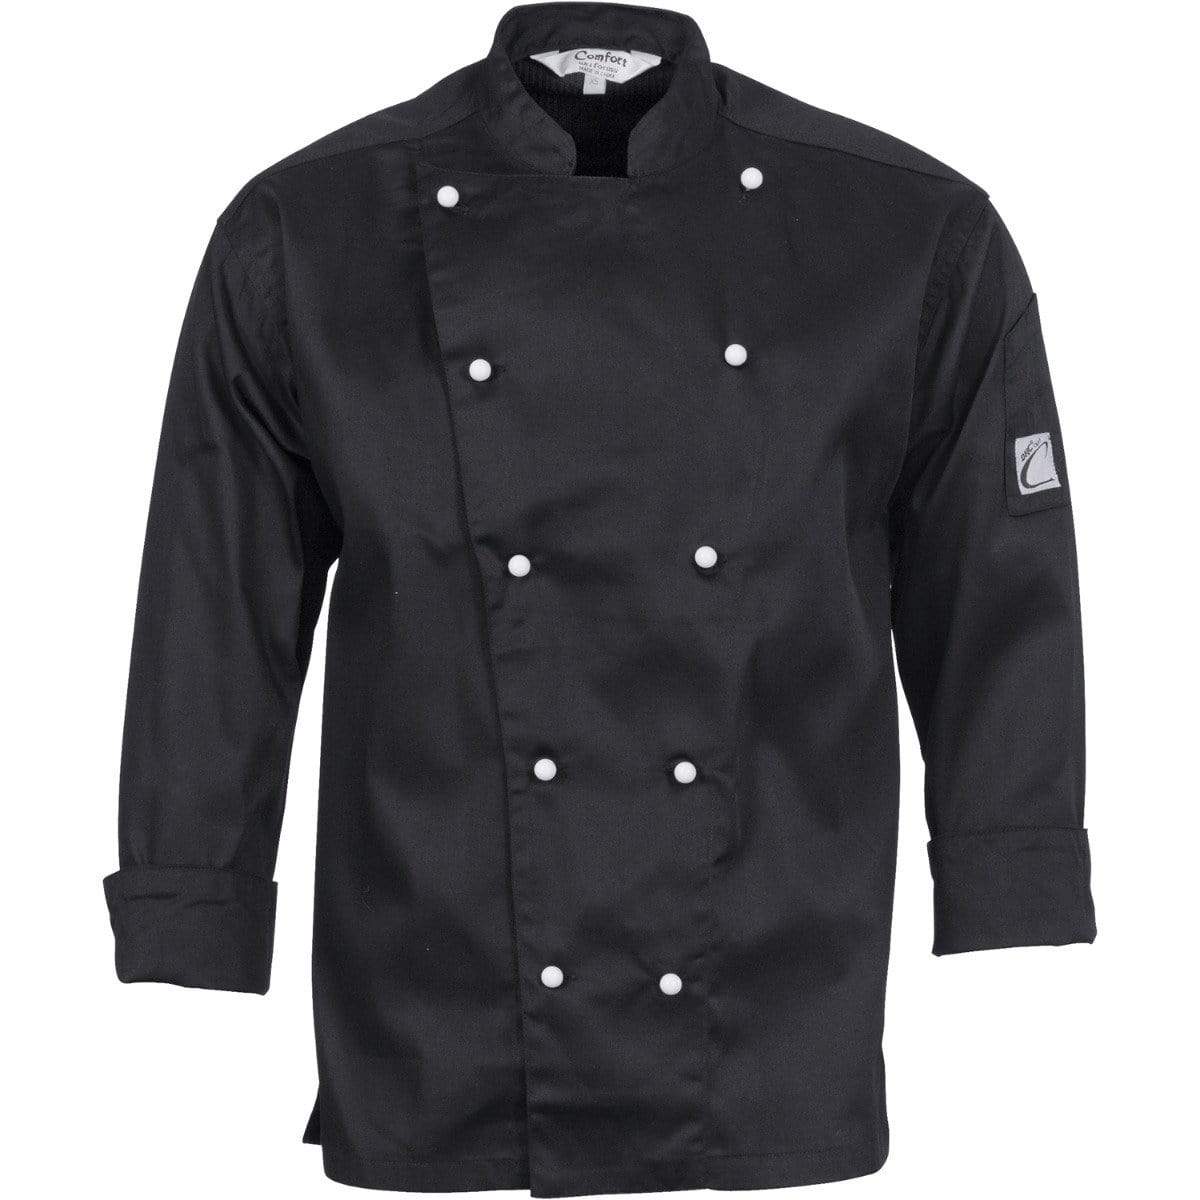 Dnc Workwear Three-way Airflow Long Sleeve Chef Jacket - 1106 Hospitality & Chefwear DNC Workwear Black XS 